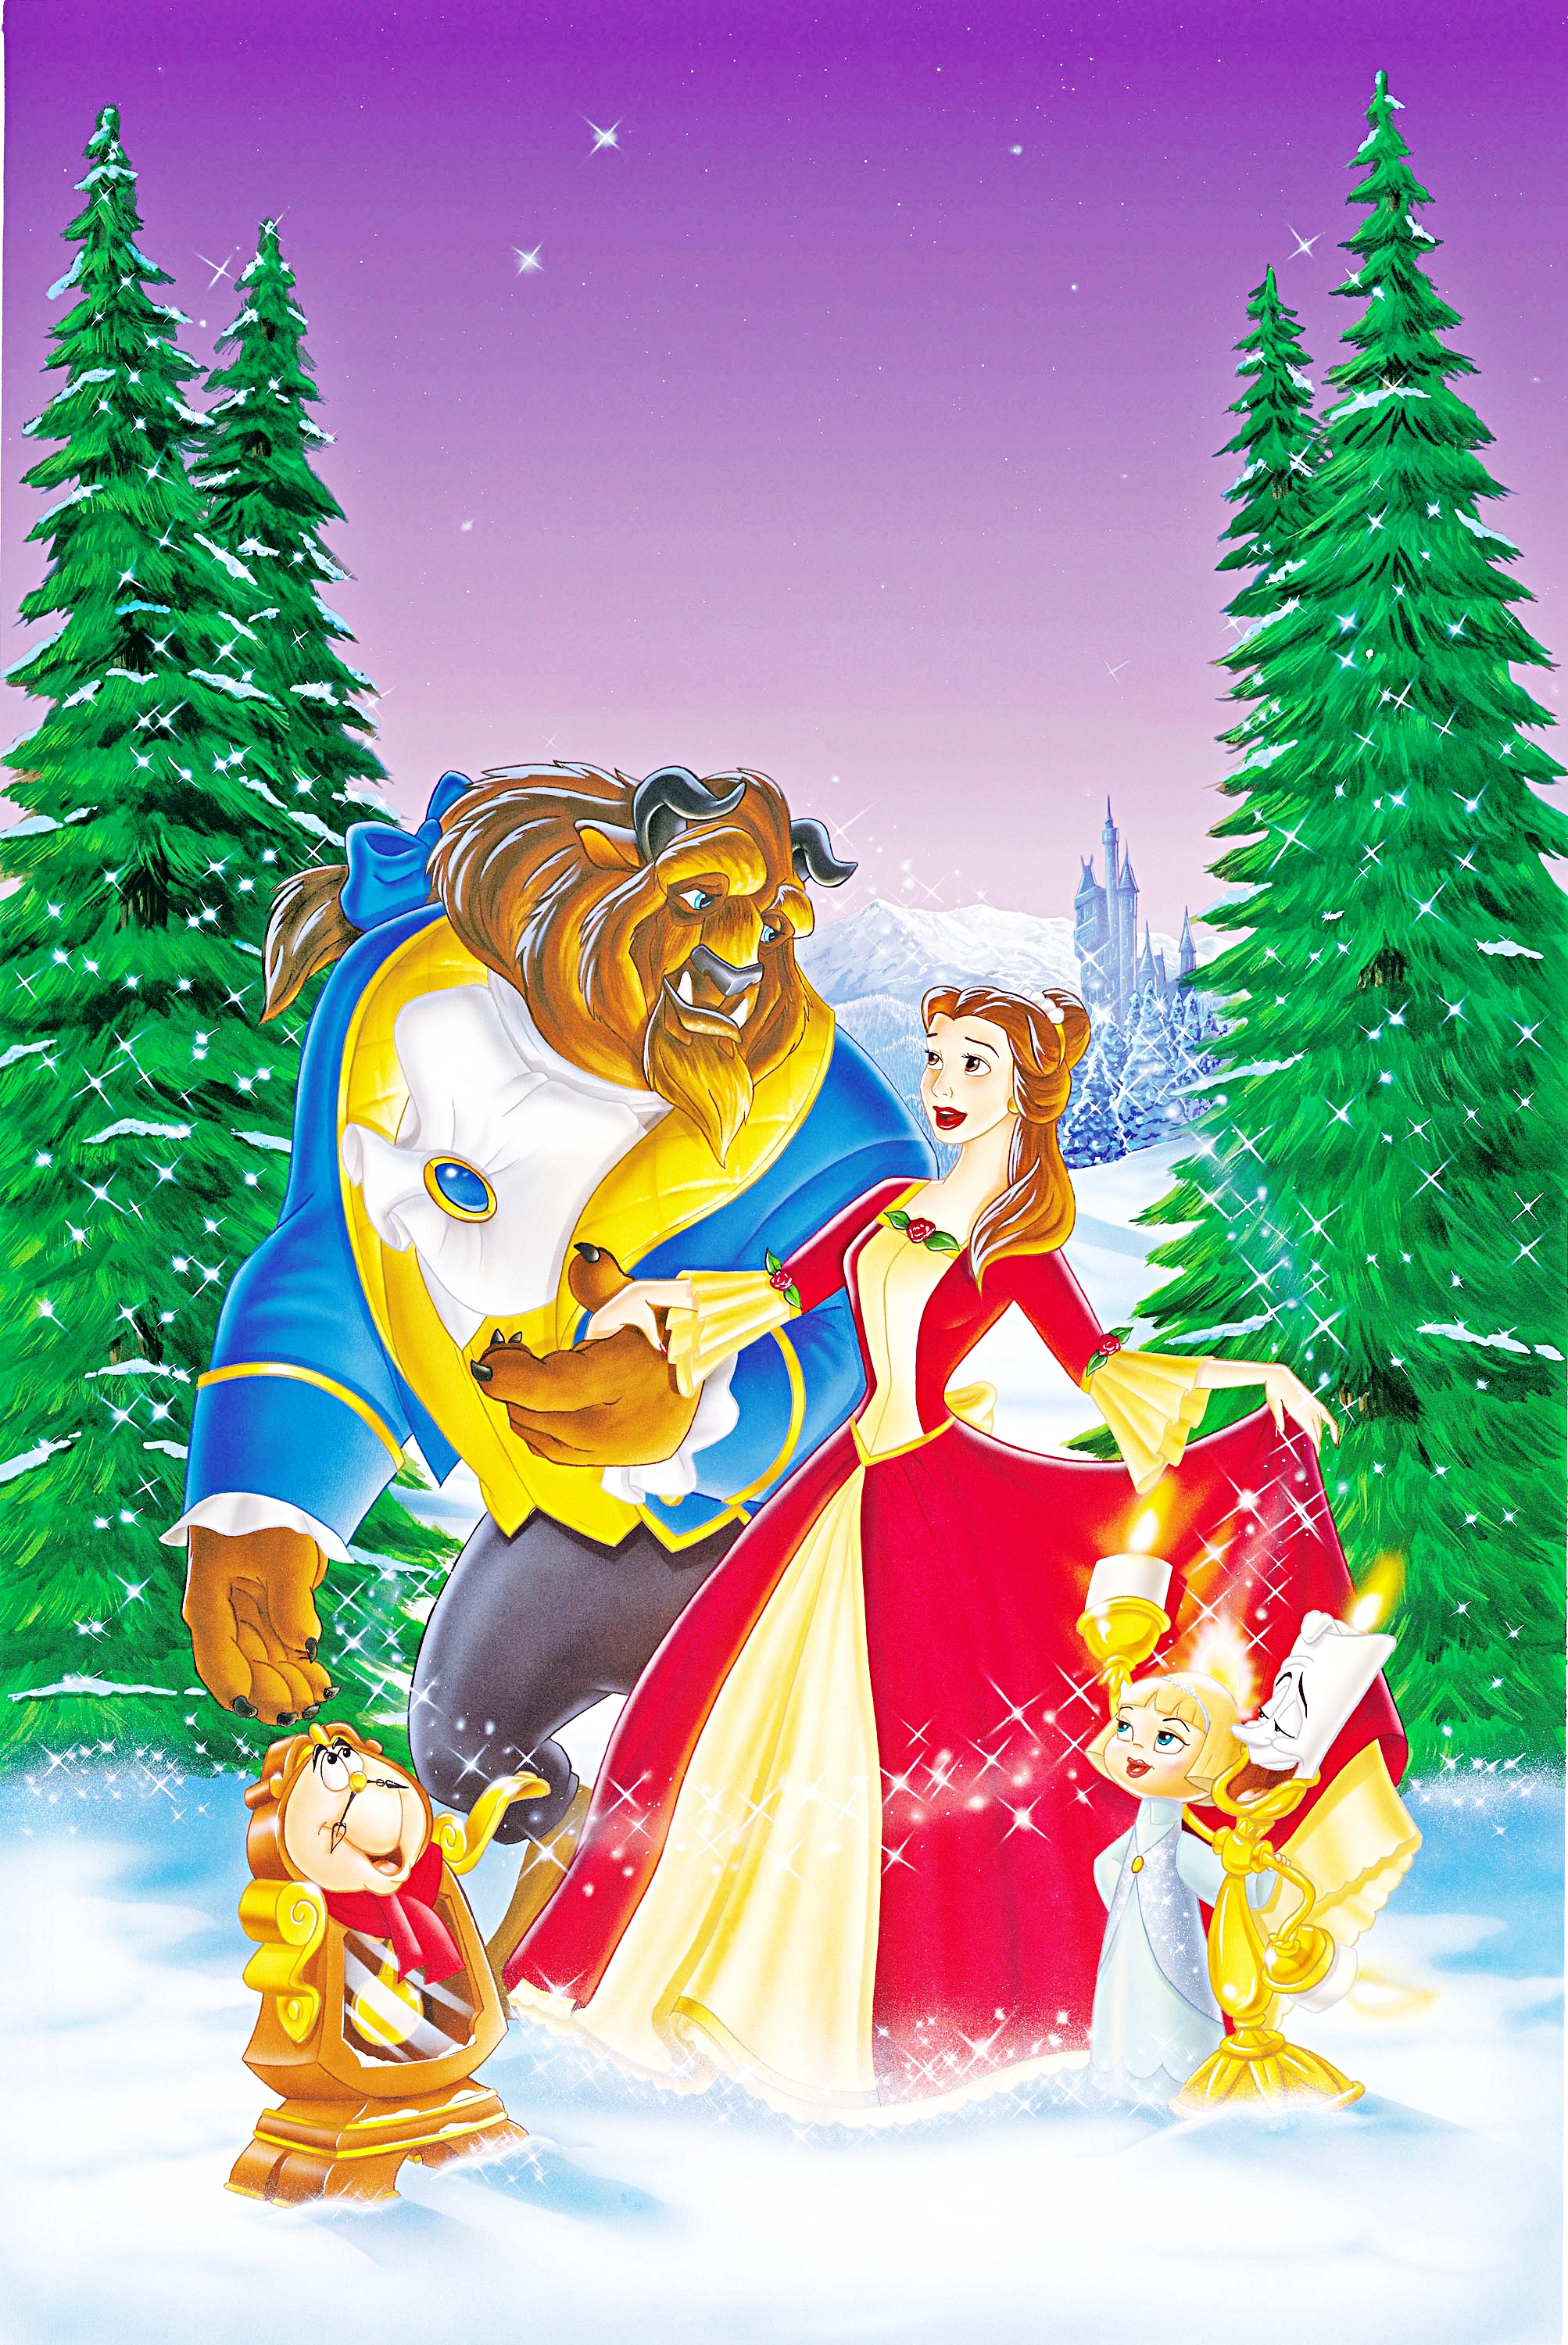 Immagini Natale Walt Disney.Walt Disney Posters Beauty And The Beast The Come D Incanto Natale Personaggi Disney Foto 32500176 Fanpop